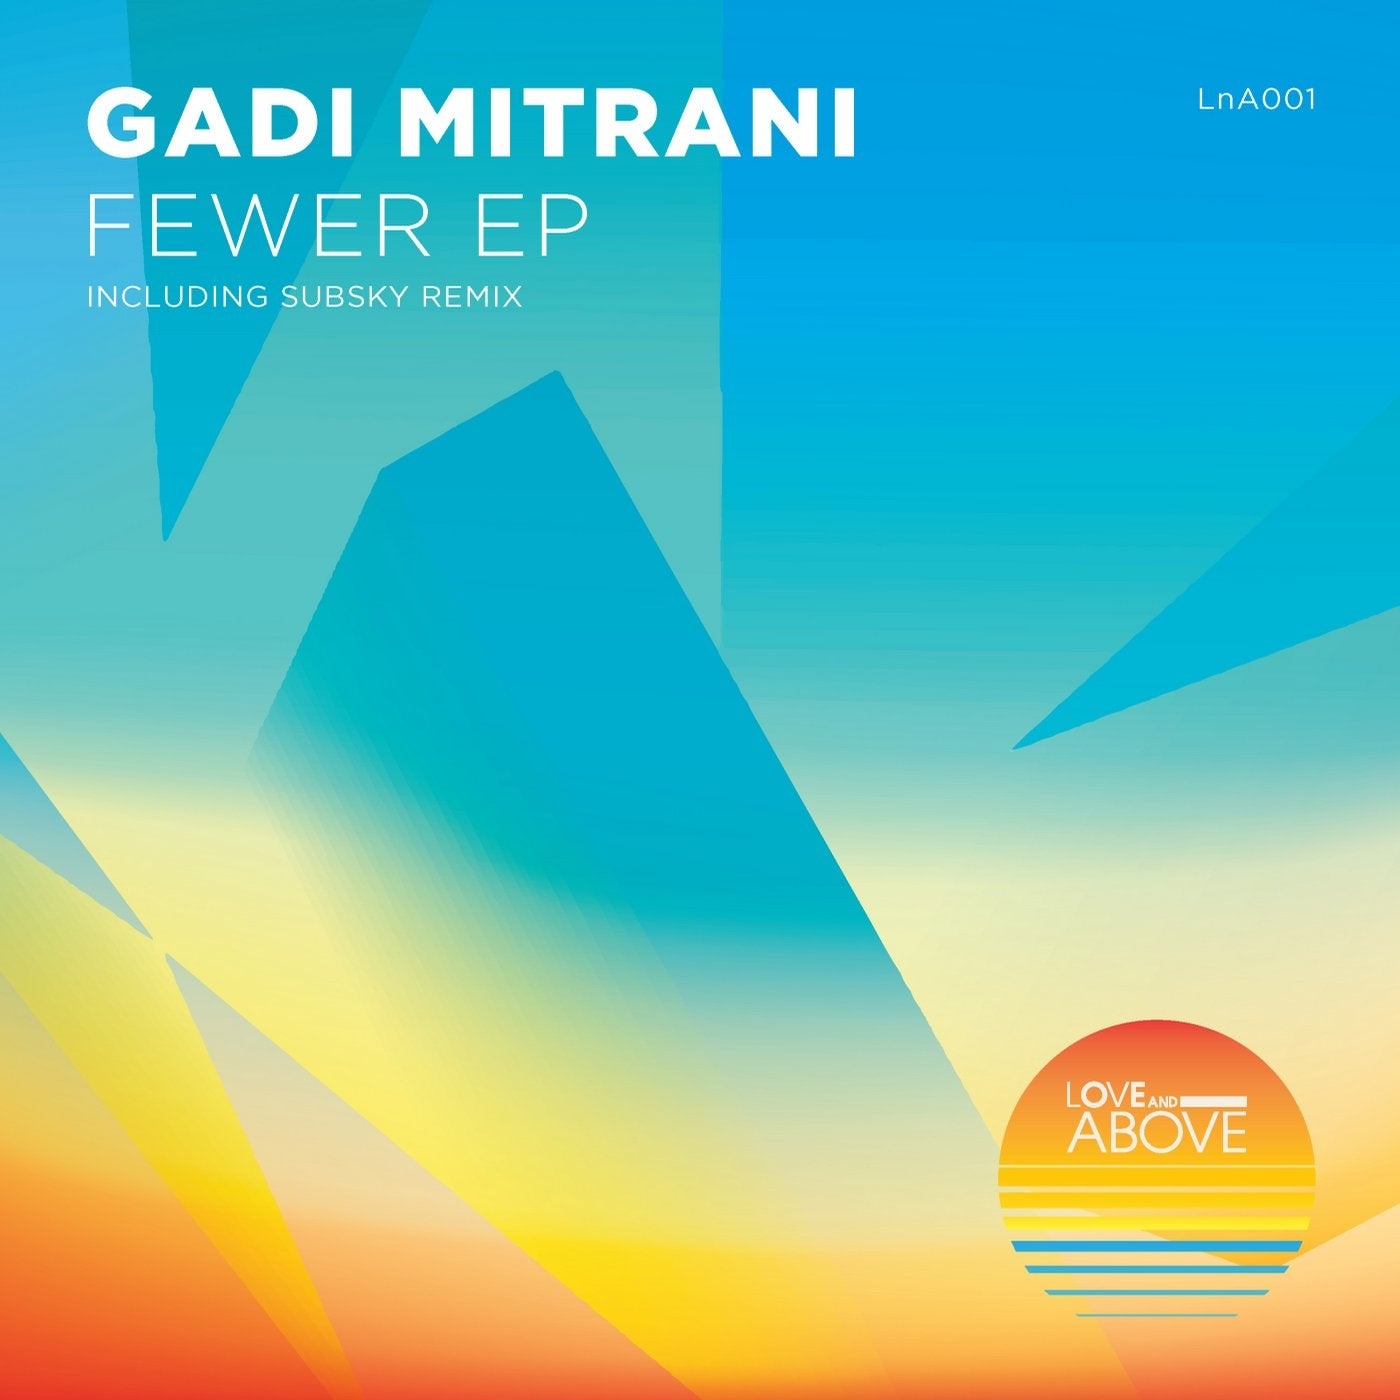 Gadi Mitrani - Fewer [LNA001]